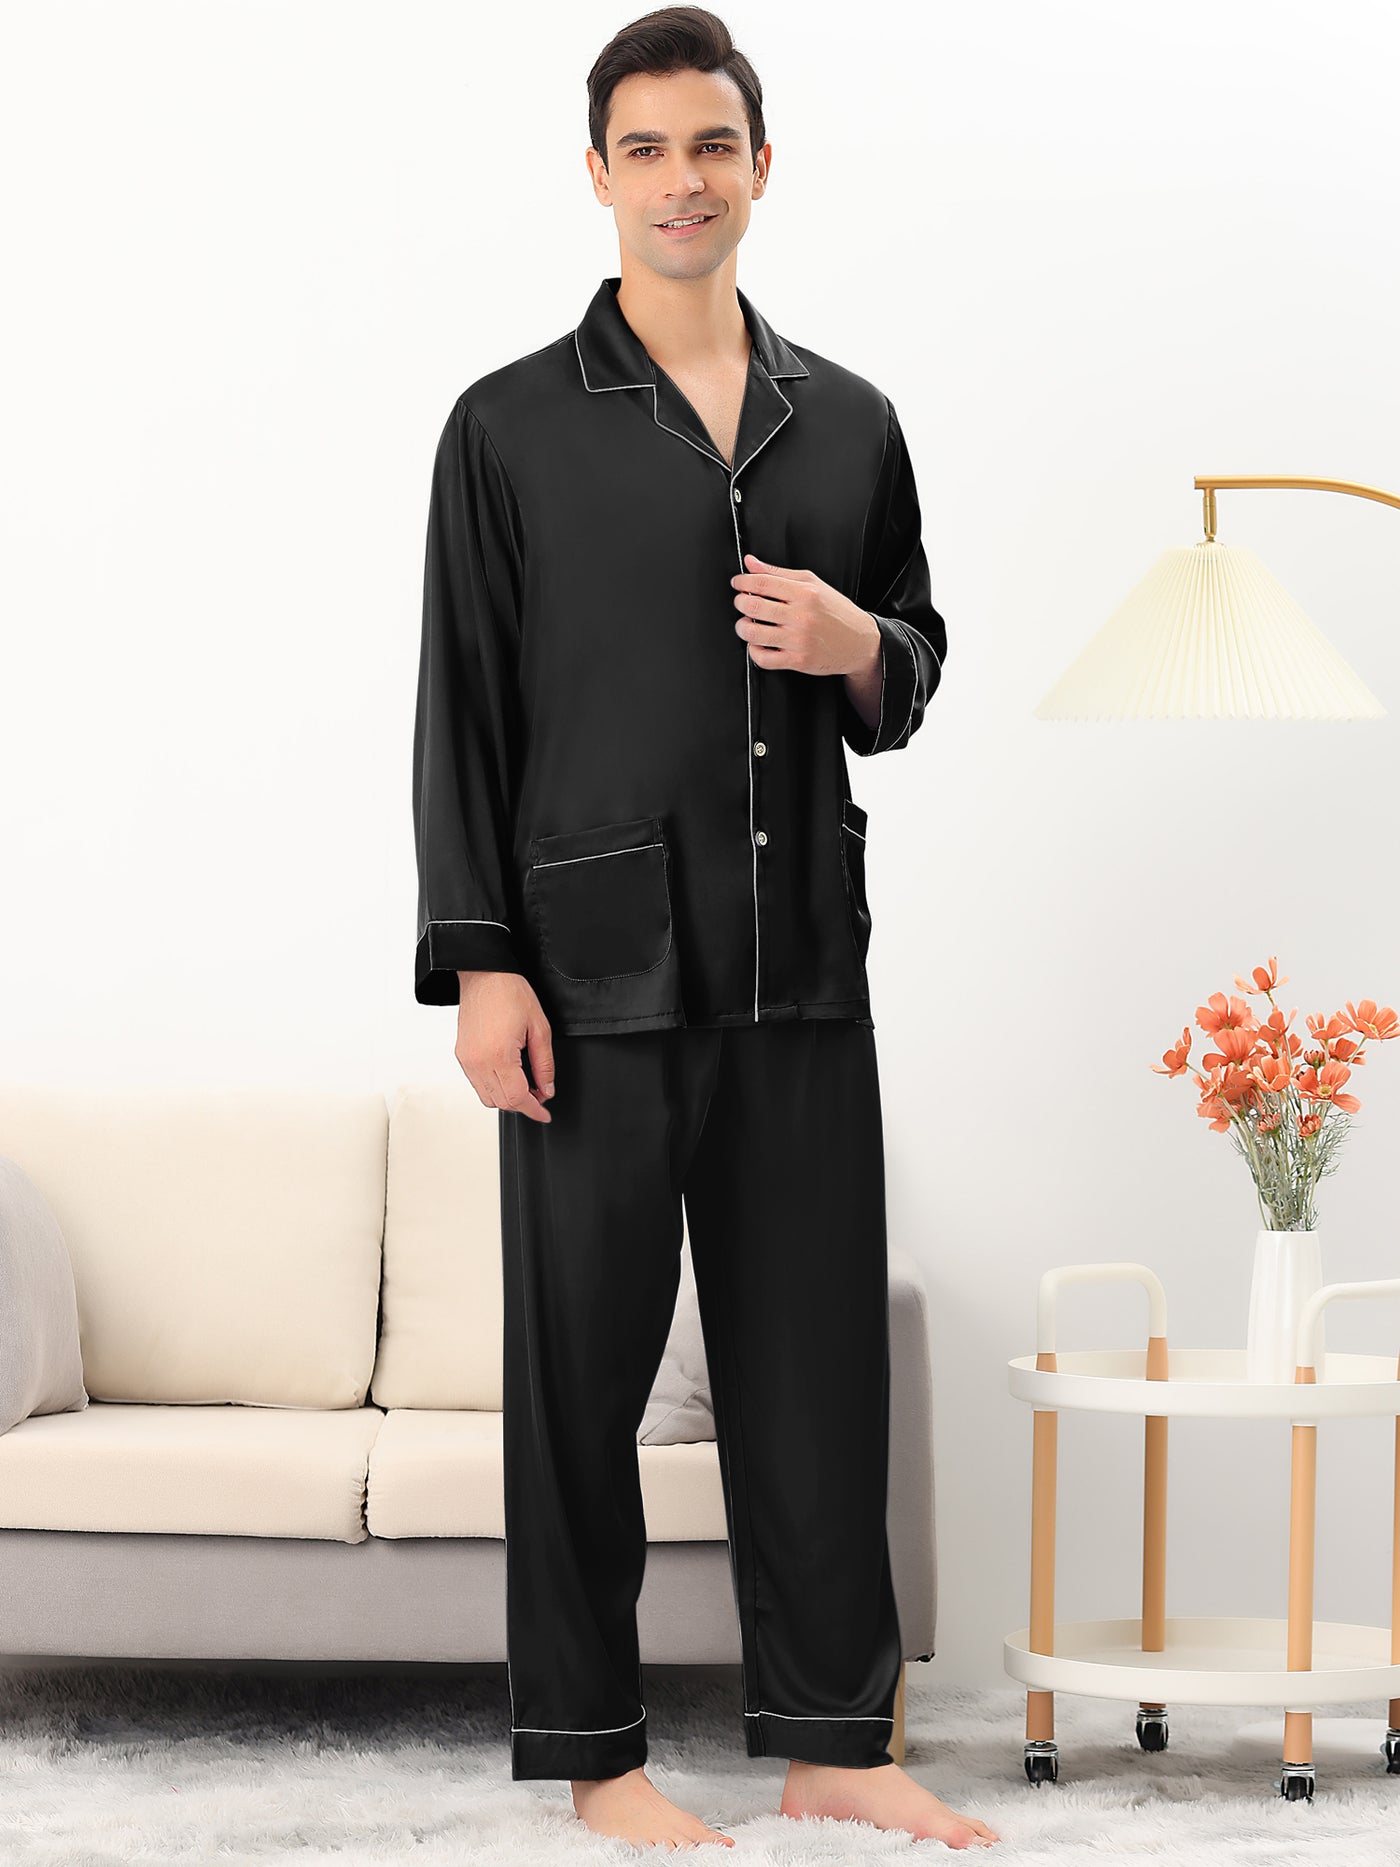 Bublédon Men's Satin Pajamas Set Long Sleeves Button Down Sleepwear Nightwear Pjs